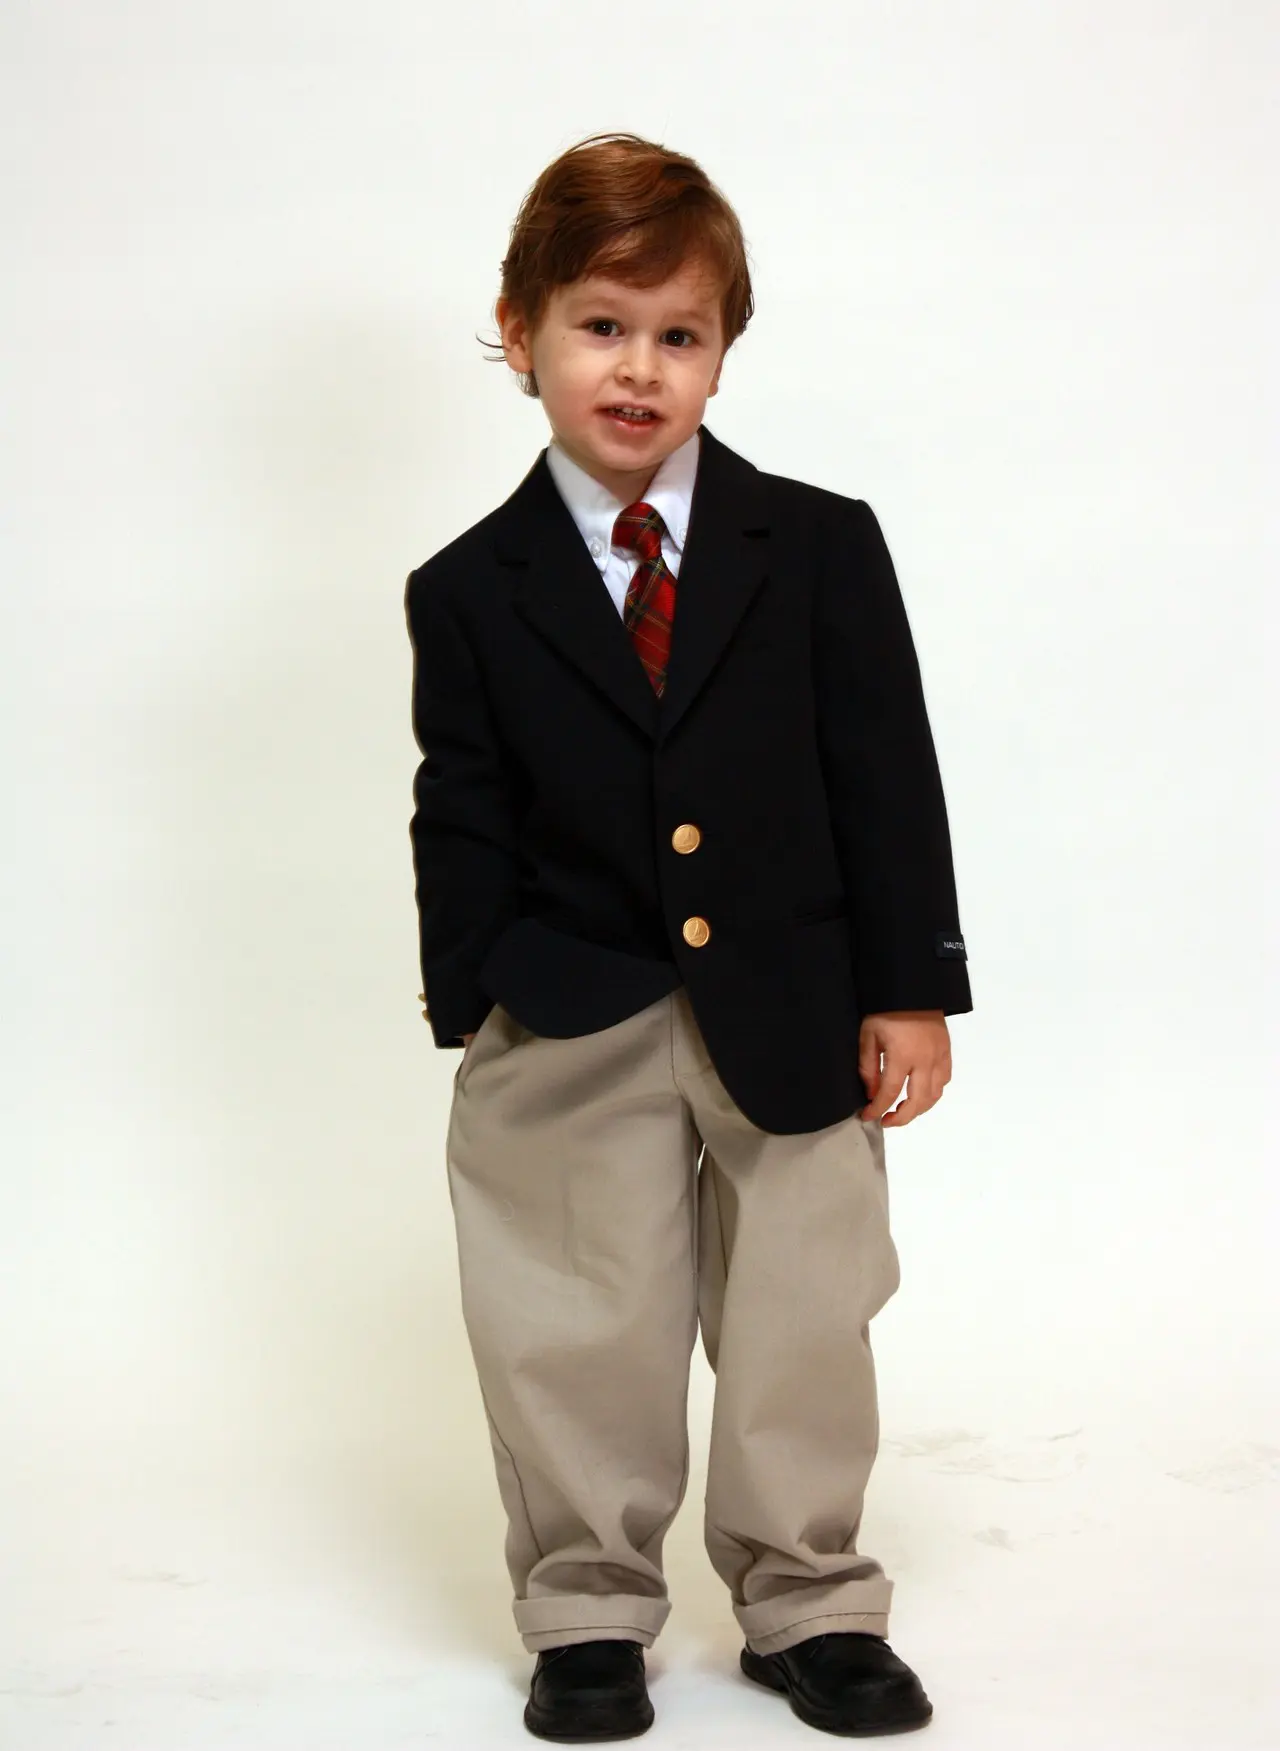 Kid in suit